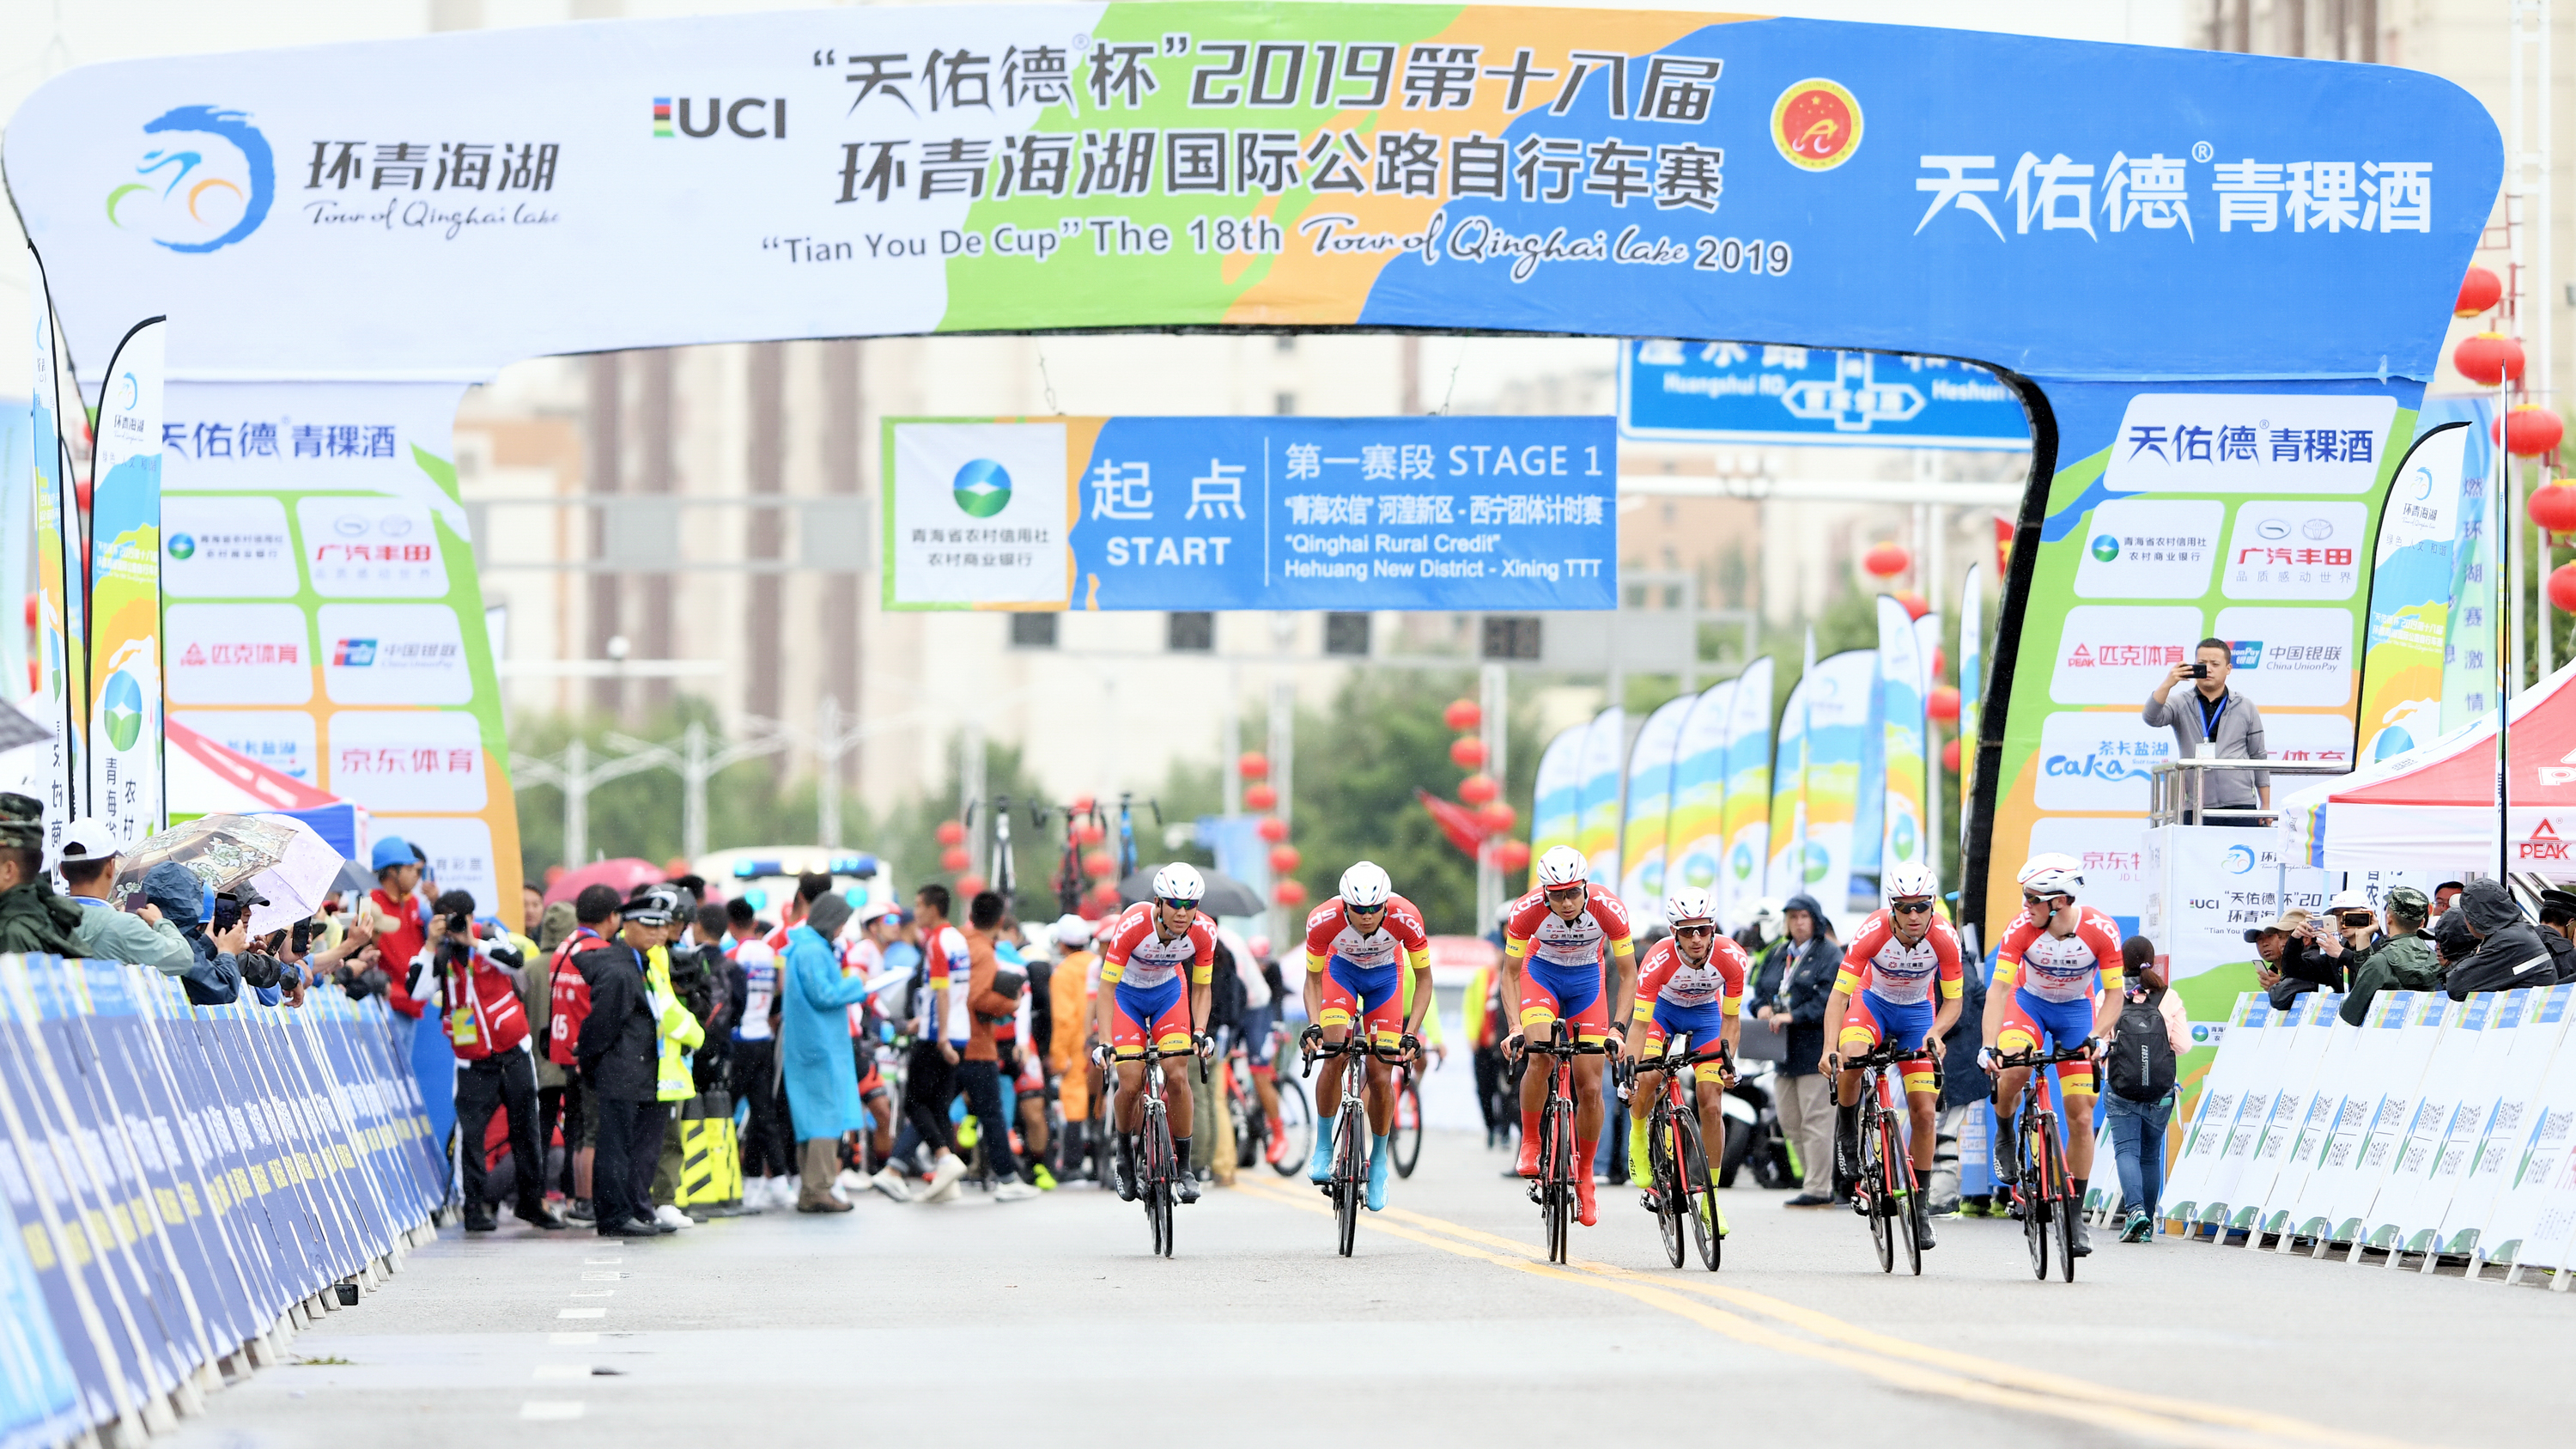 Tour del lago Qinghai "Tian You De Cup" 2019. Gara ciclistica su strada internazionale